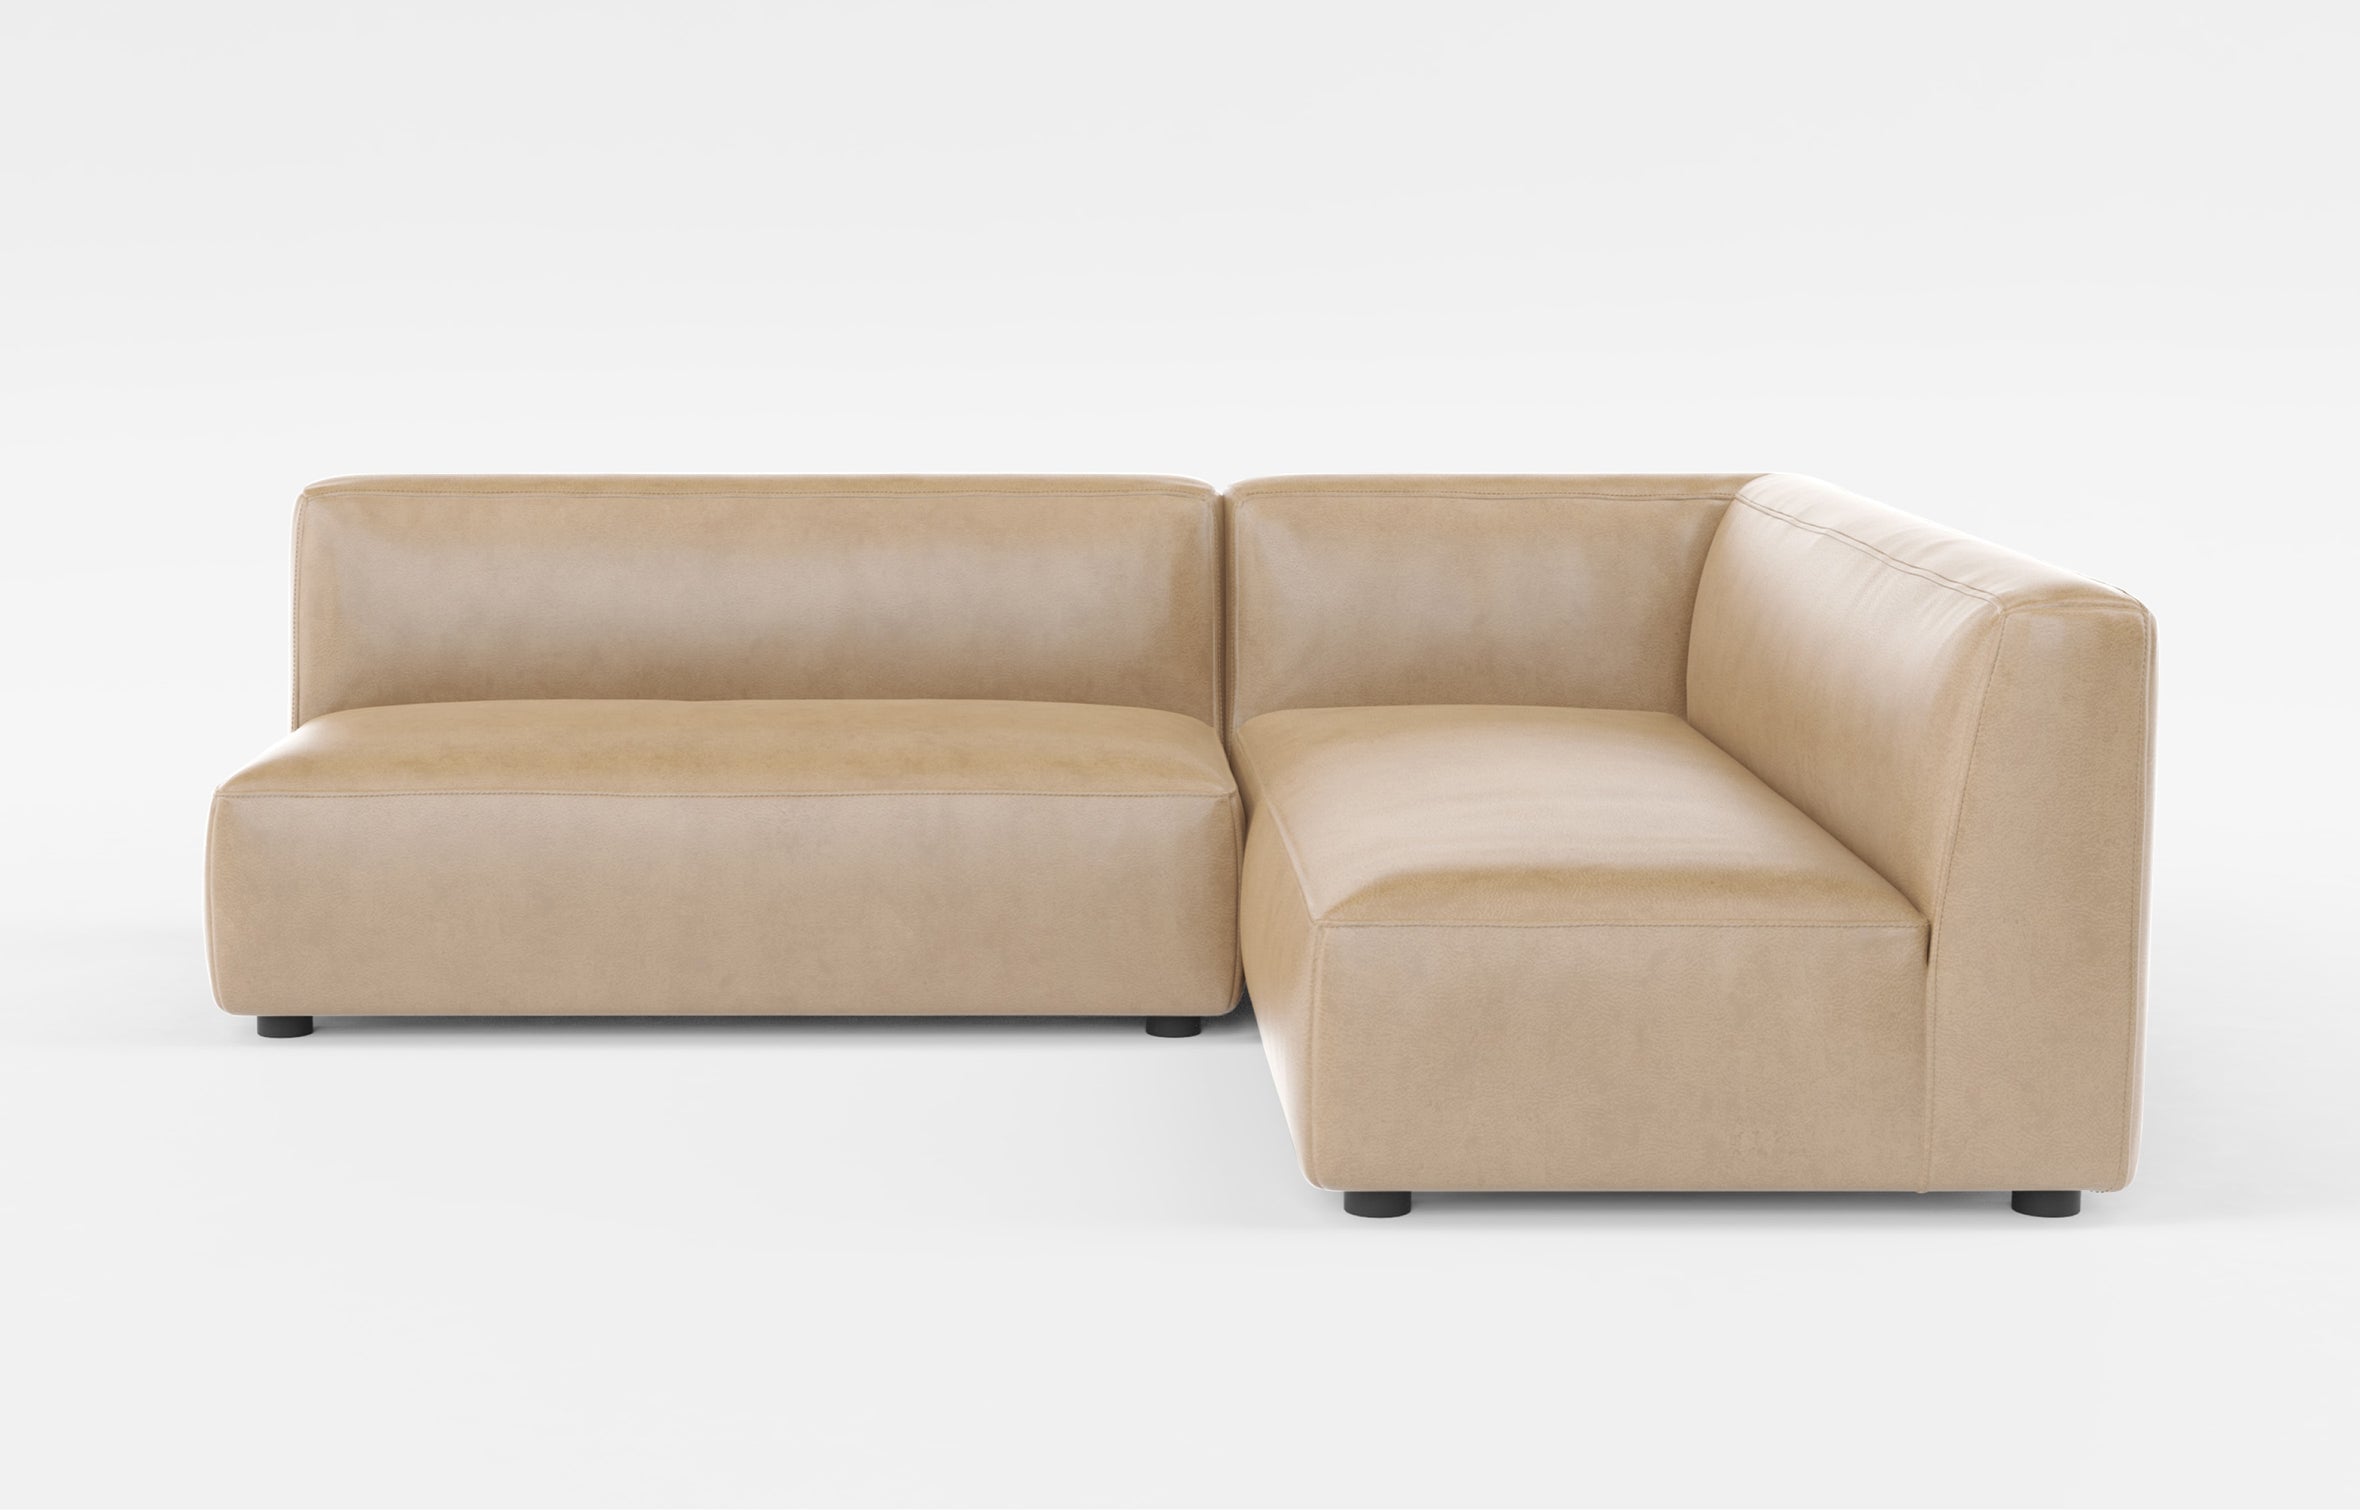 Corner || Bounce modular corner sofa in light brown | ff&e dorm furniture manufacturers | Roomy | Chicago